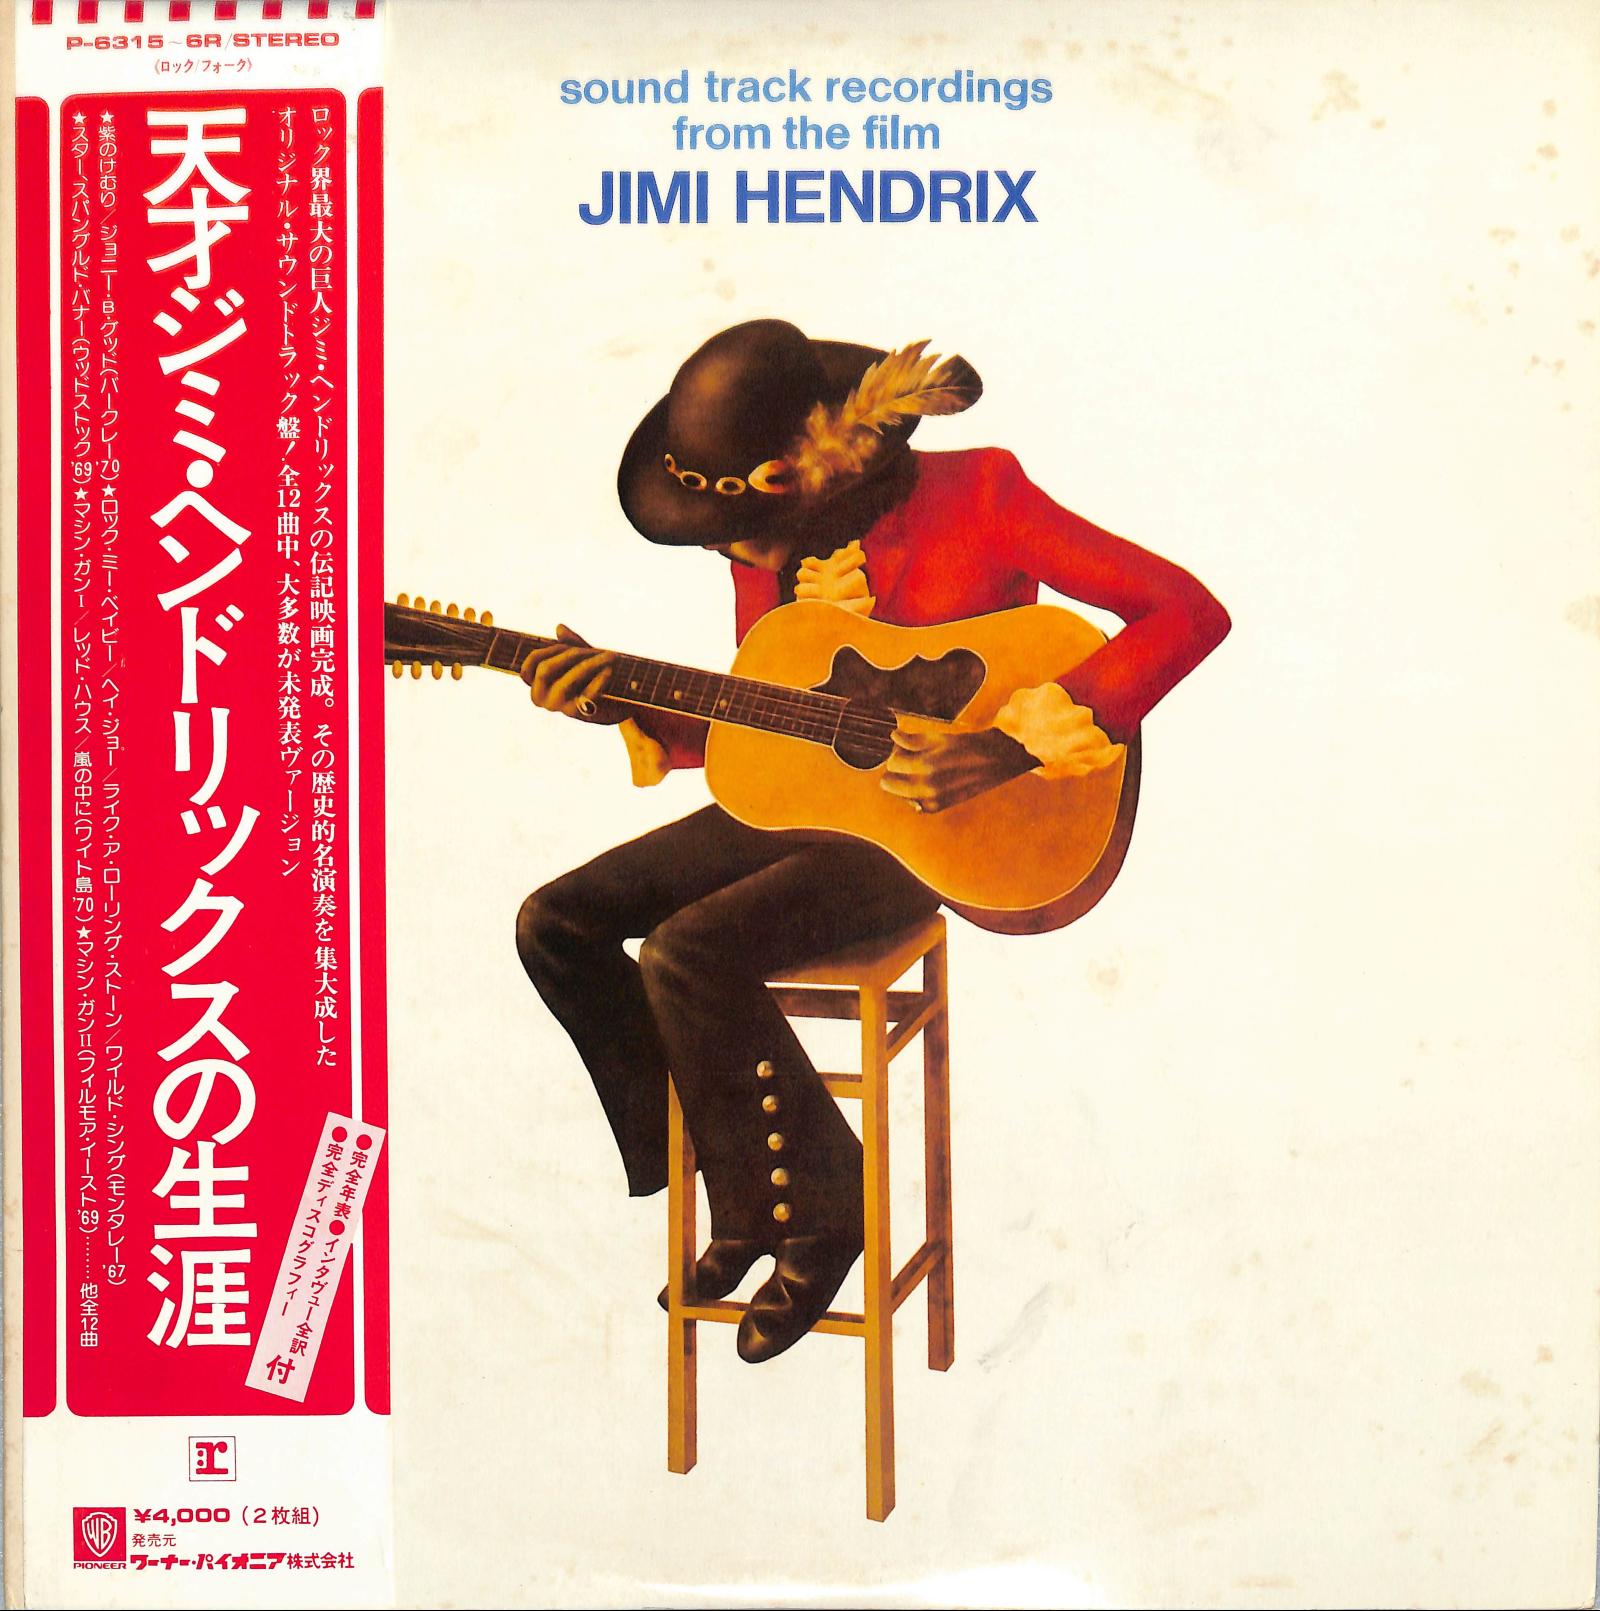 JIMI HENDRIX - Sound Track Recordings From The Film "Jimi Hendrix"